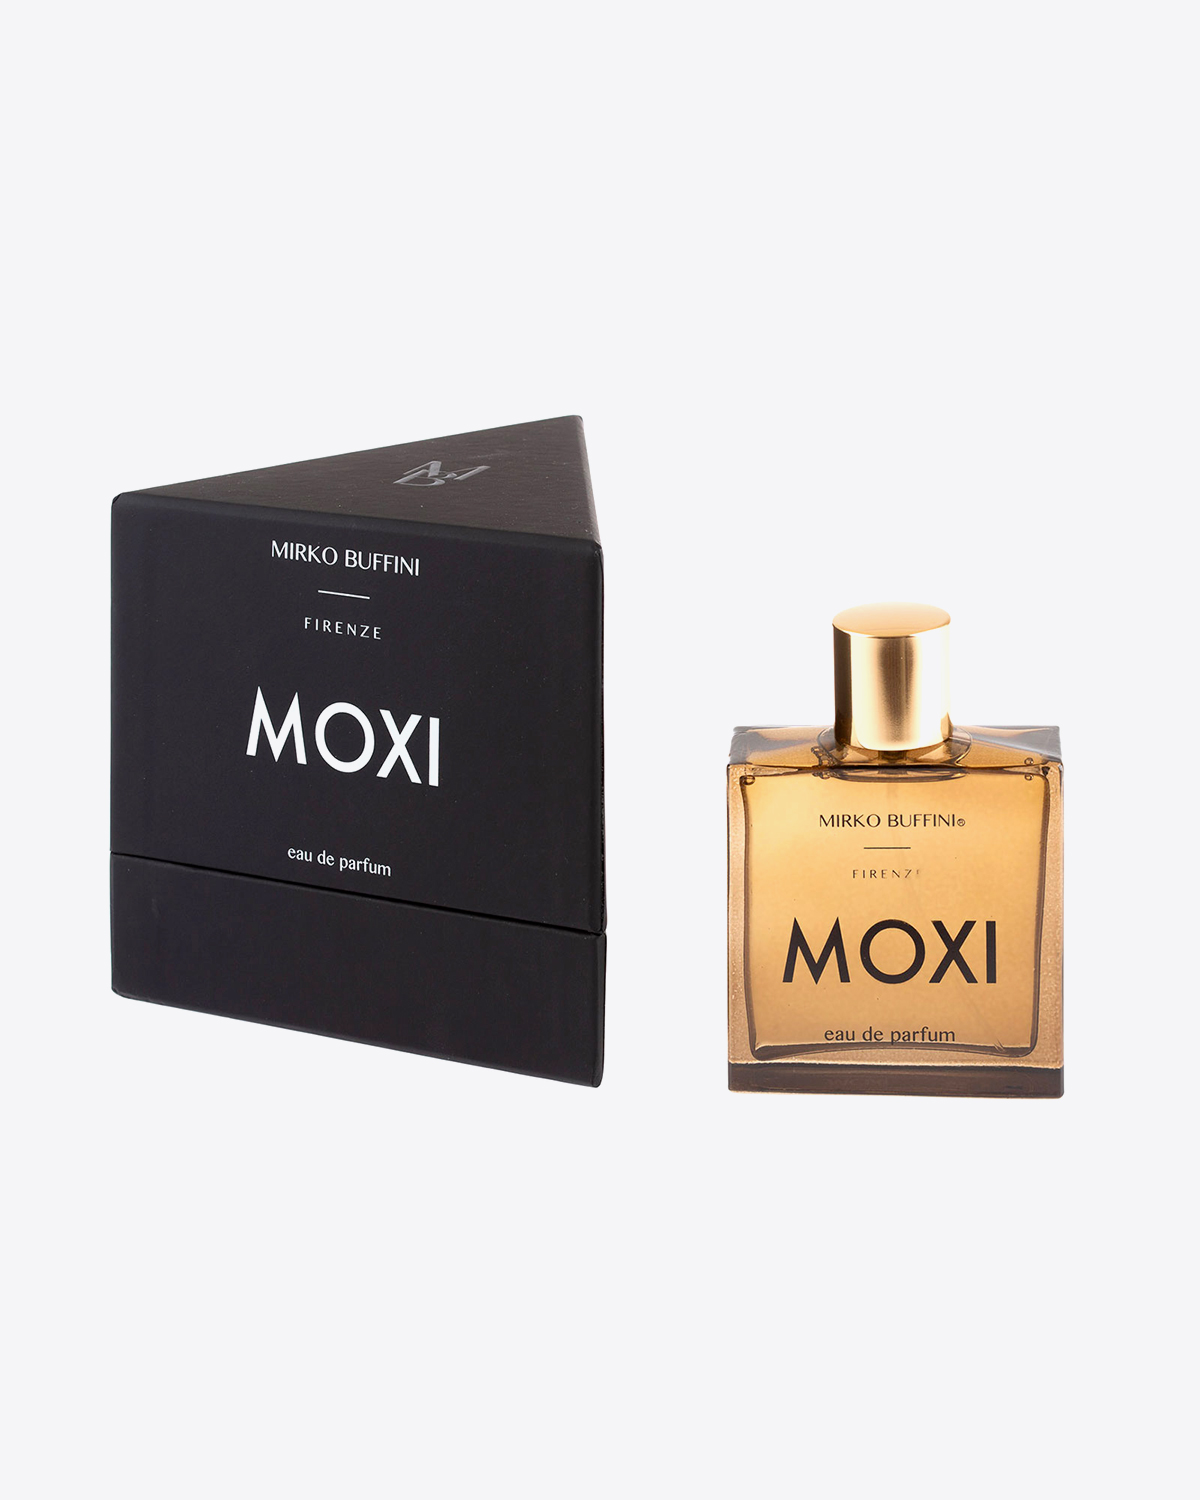 Parfum Moxi Mirko Buffini. Flacon de 30 ml vendu dans sa boite triangulaire noire. Collection Black.